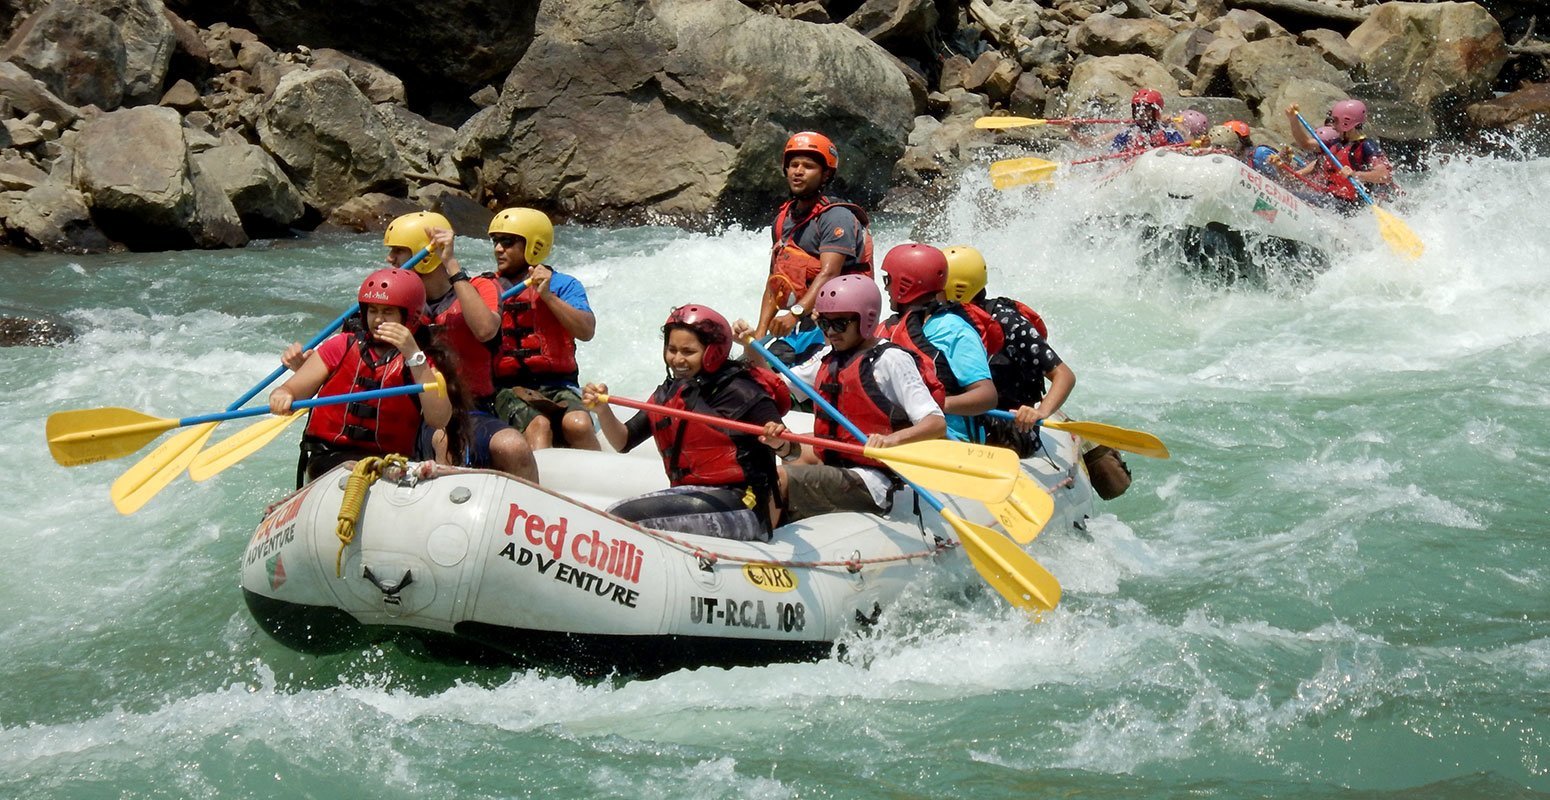 Ganga River Rafting from Kaudiyala (Kodiyala) in Uttarakhand with ...